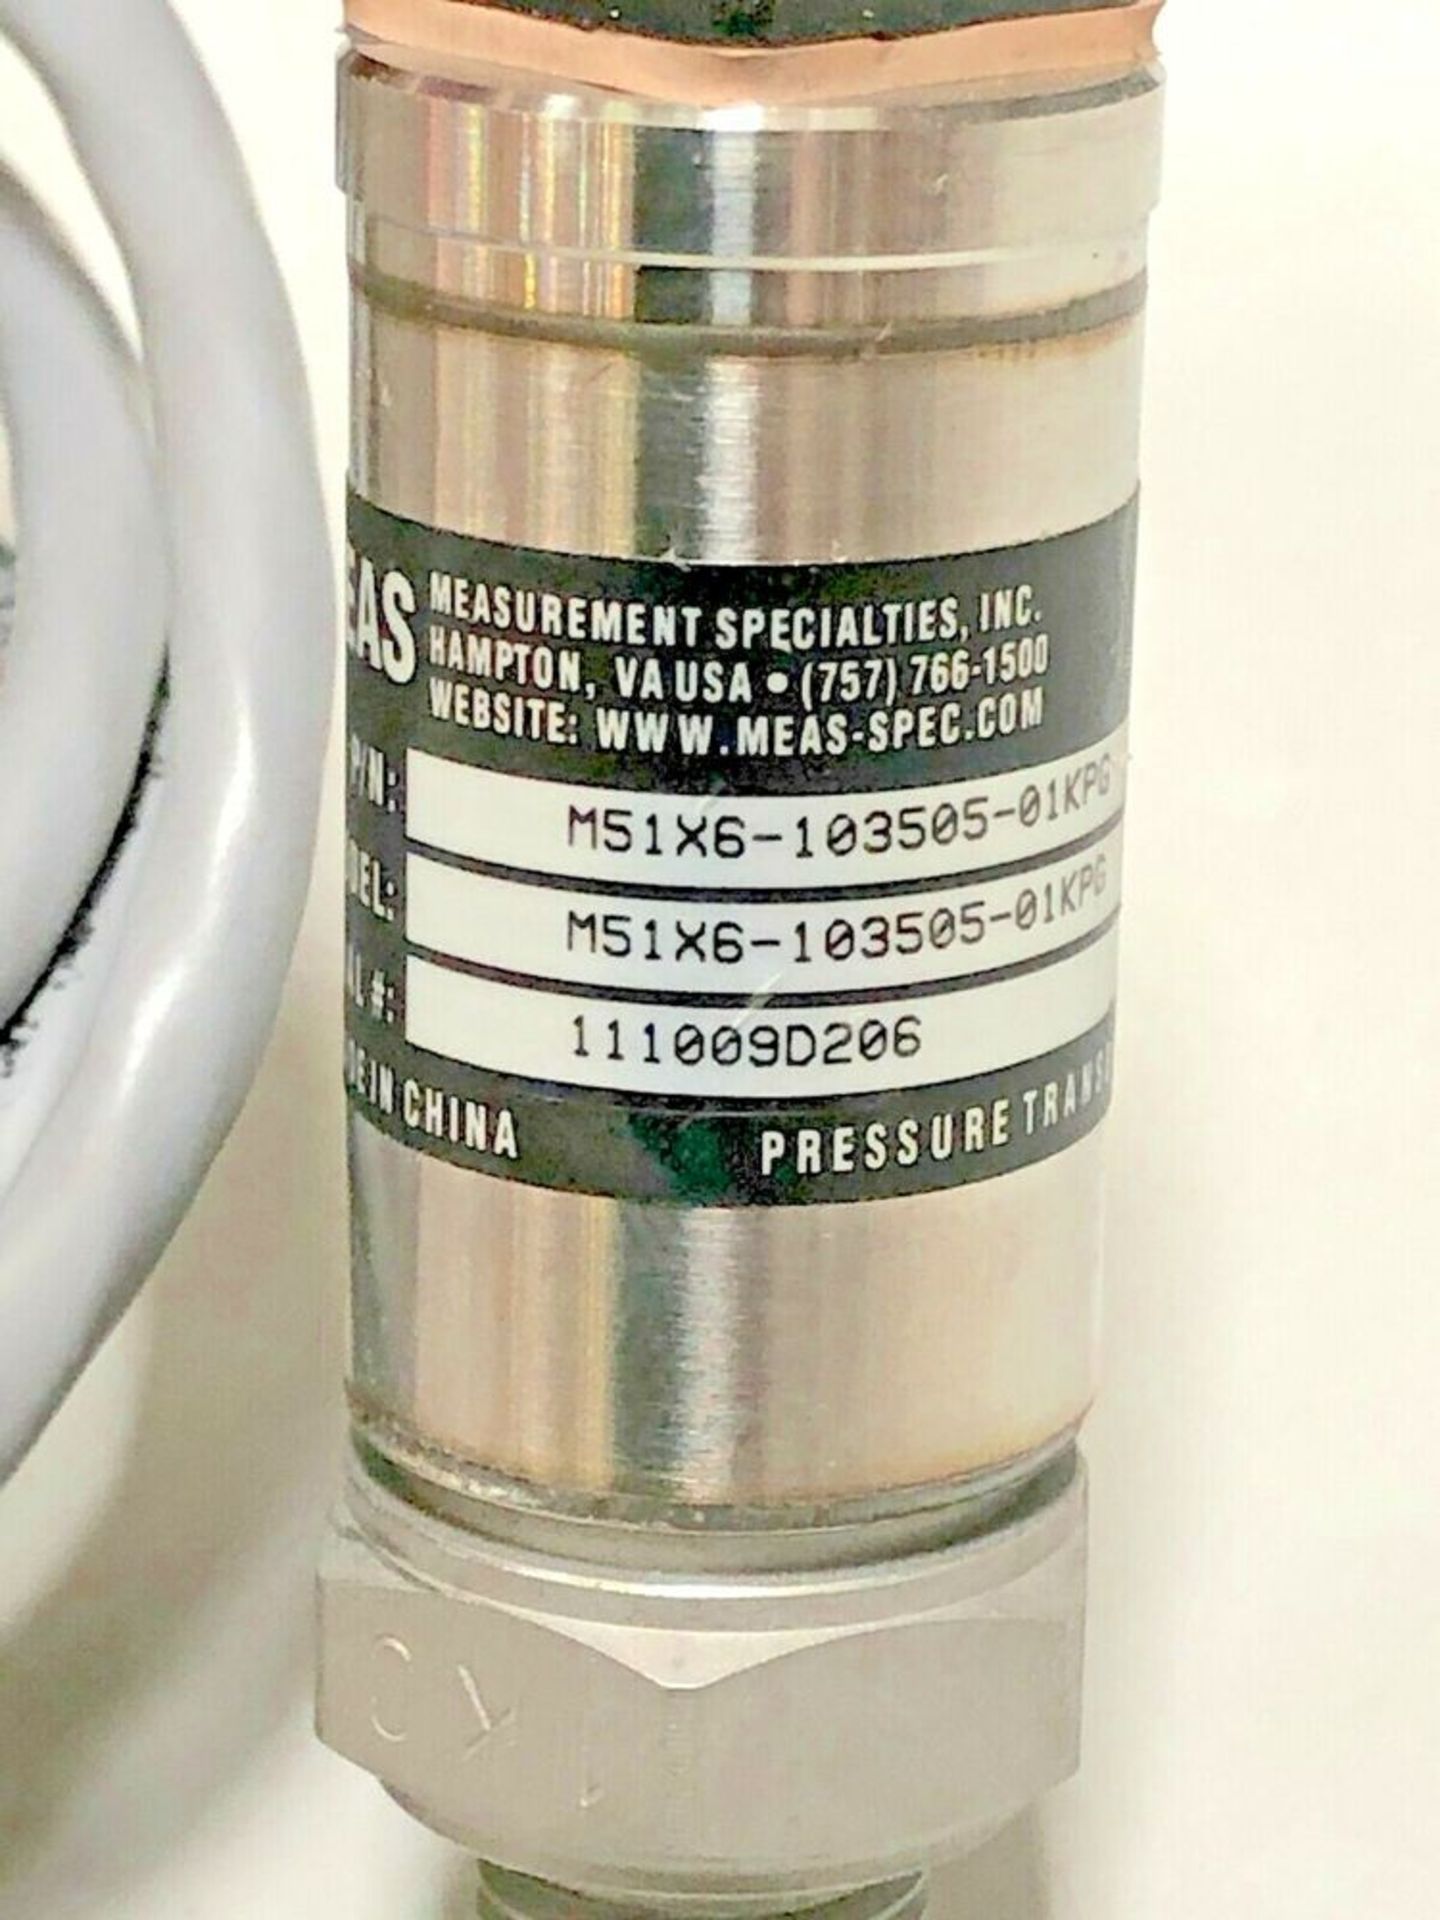 MEAS Measurement Specialties M51X6-103505-01KPG Pressure Gauge 1000 PSI - Image 2 of 2